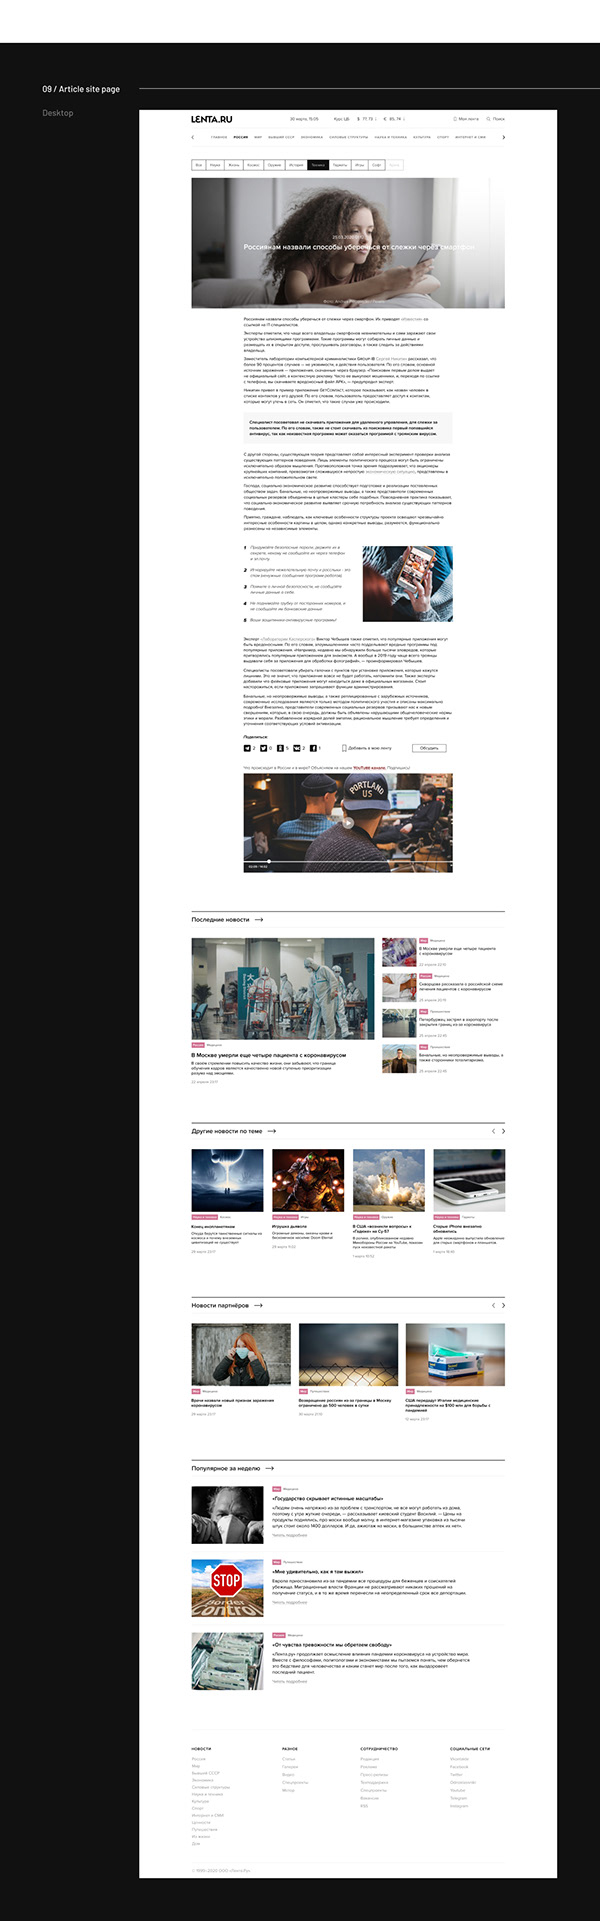 News site redesign LENTA.RU